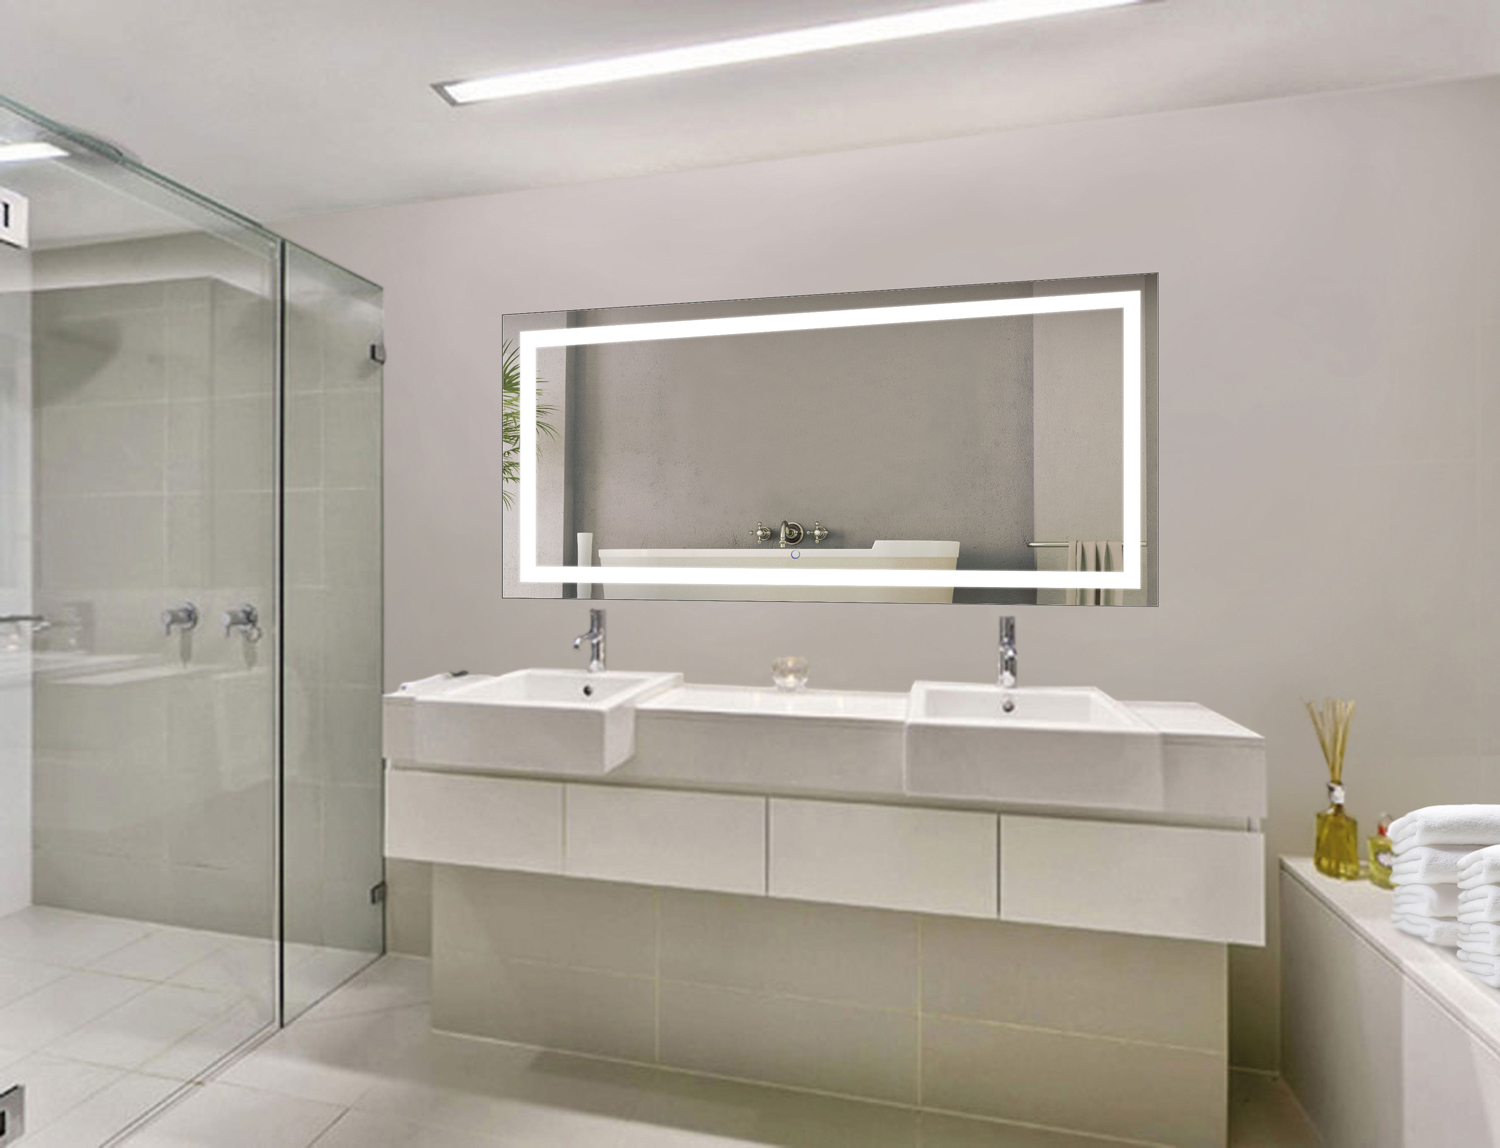 60 Inch Mirror For Bathroom Vanity